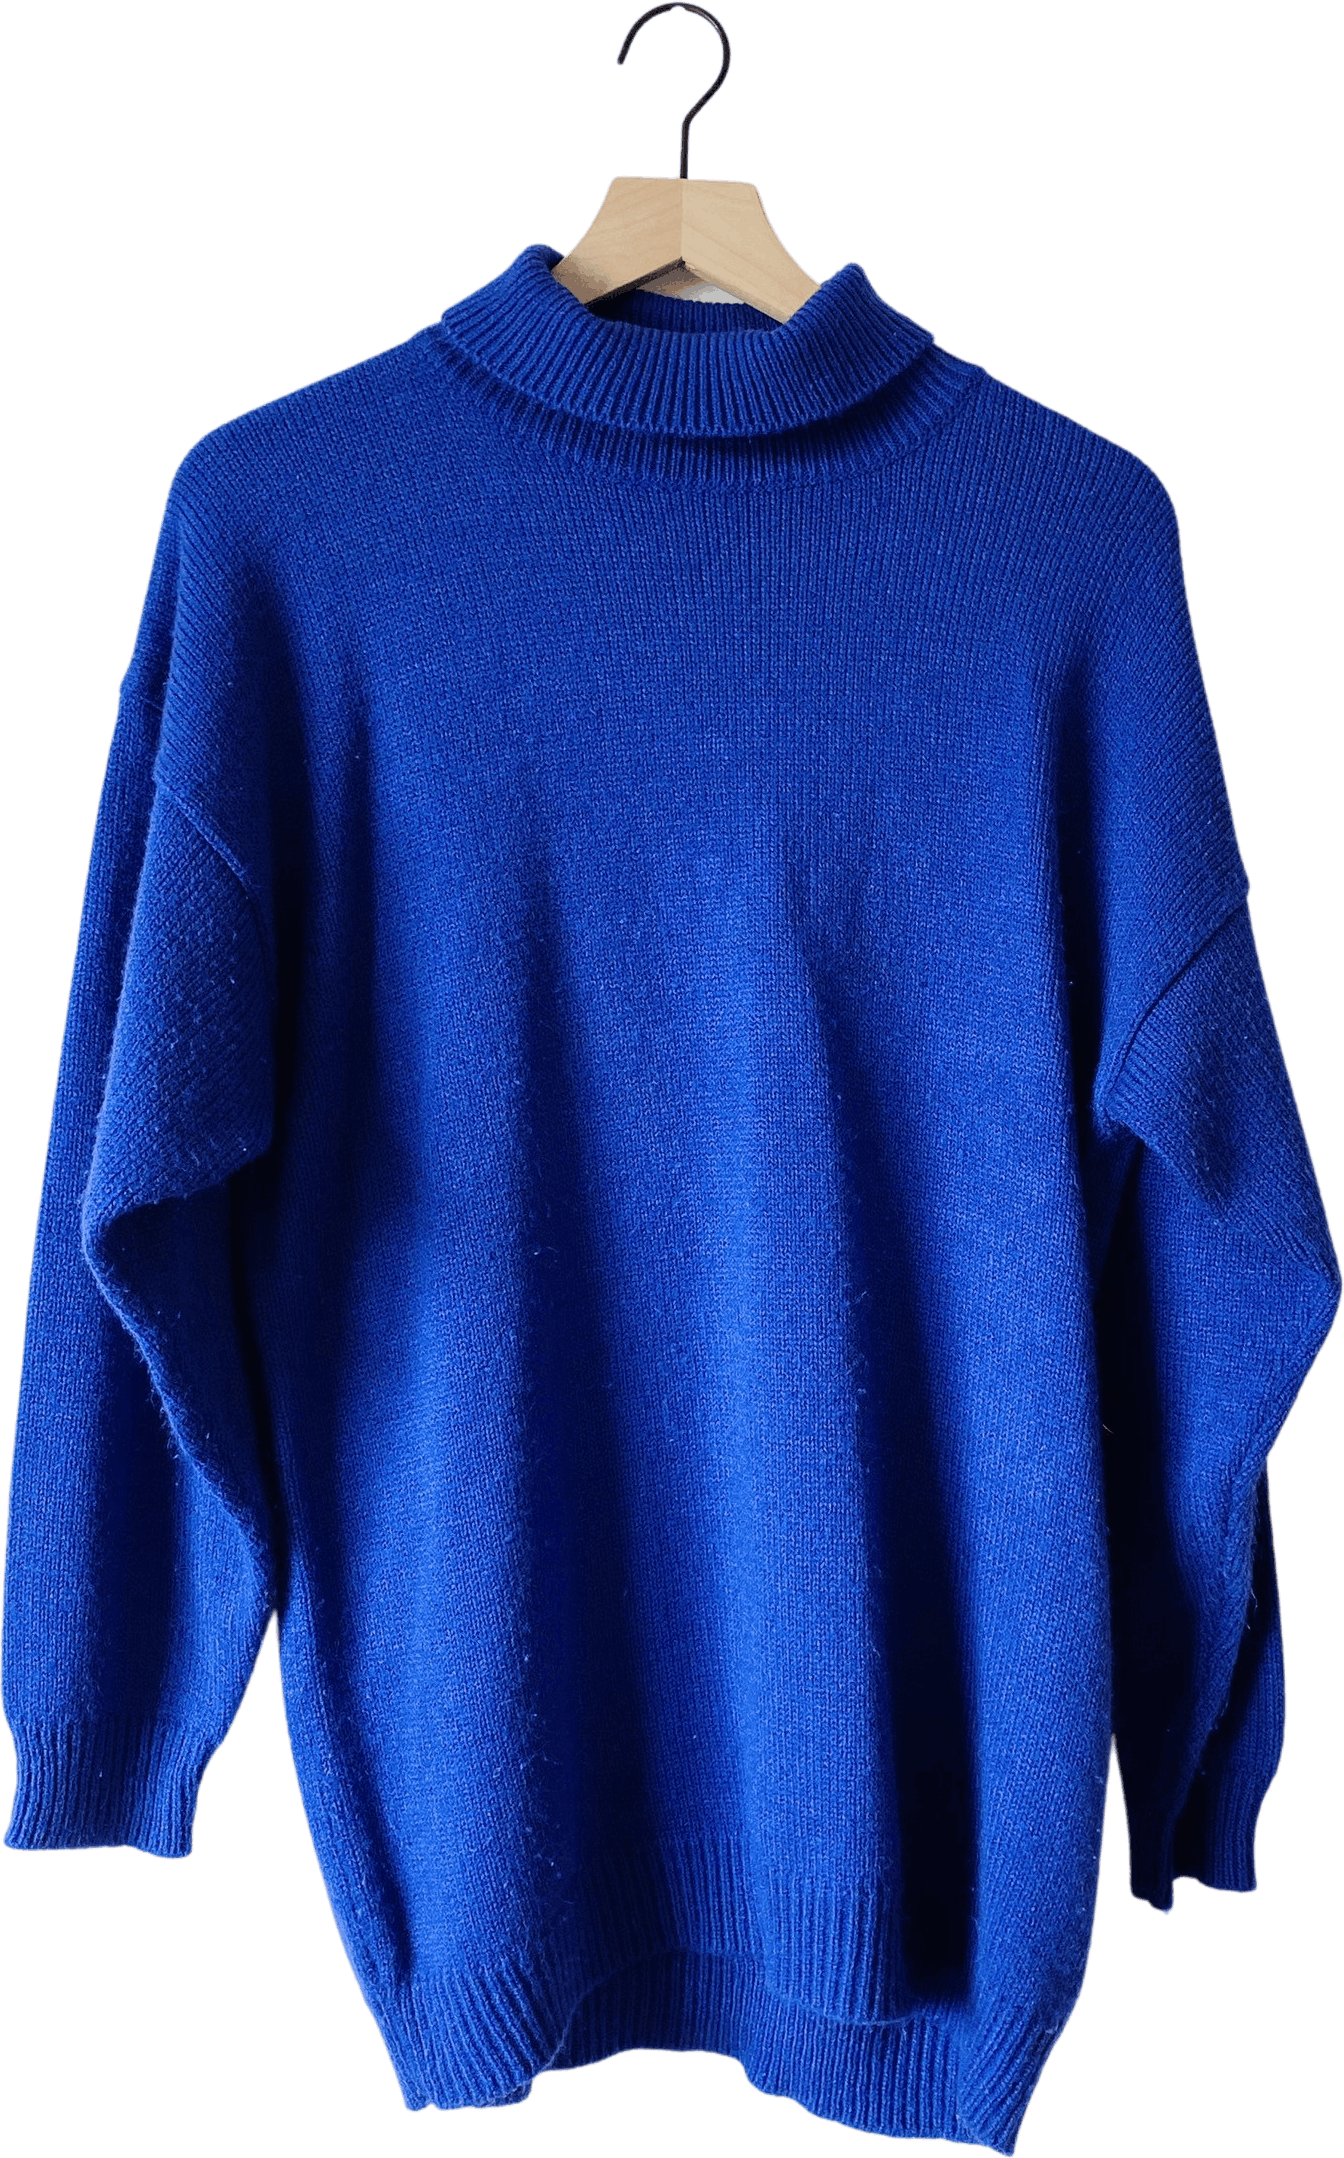 Vintage 90's Royal Purple Knit Turtleneck Sweater by One Step Up | Shop ...